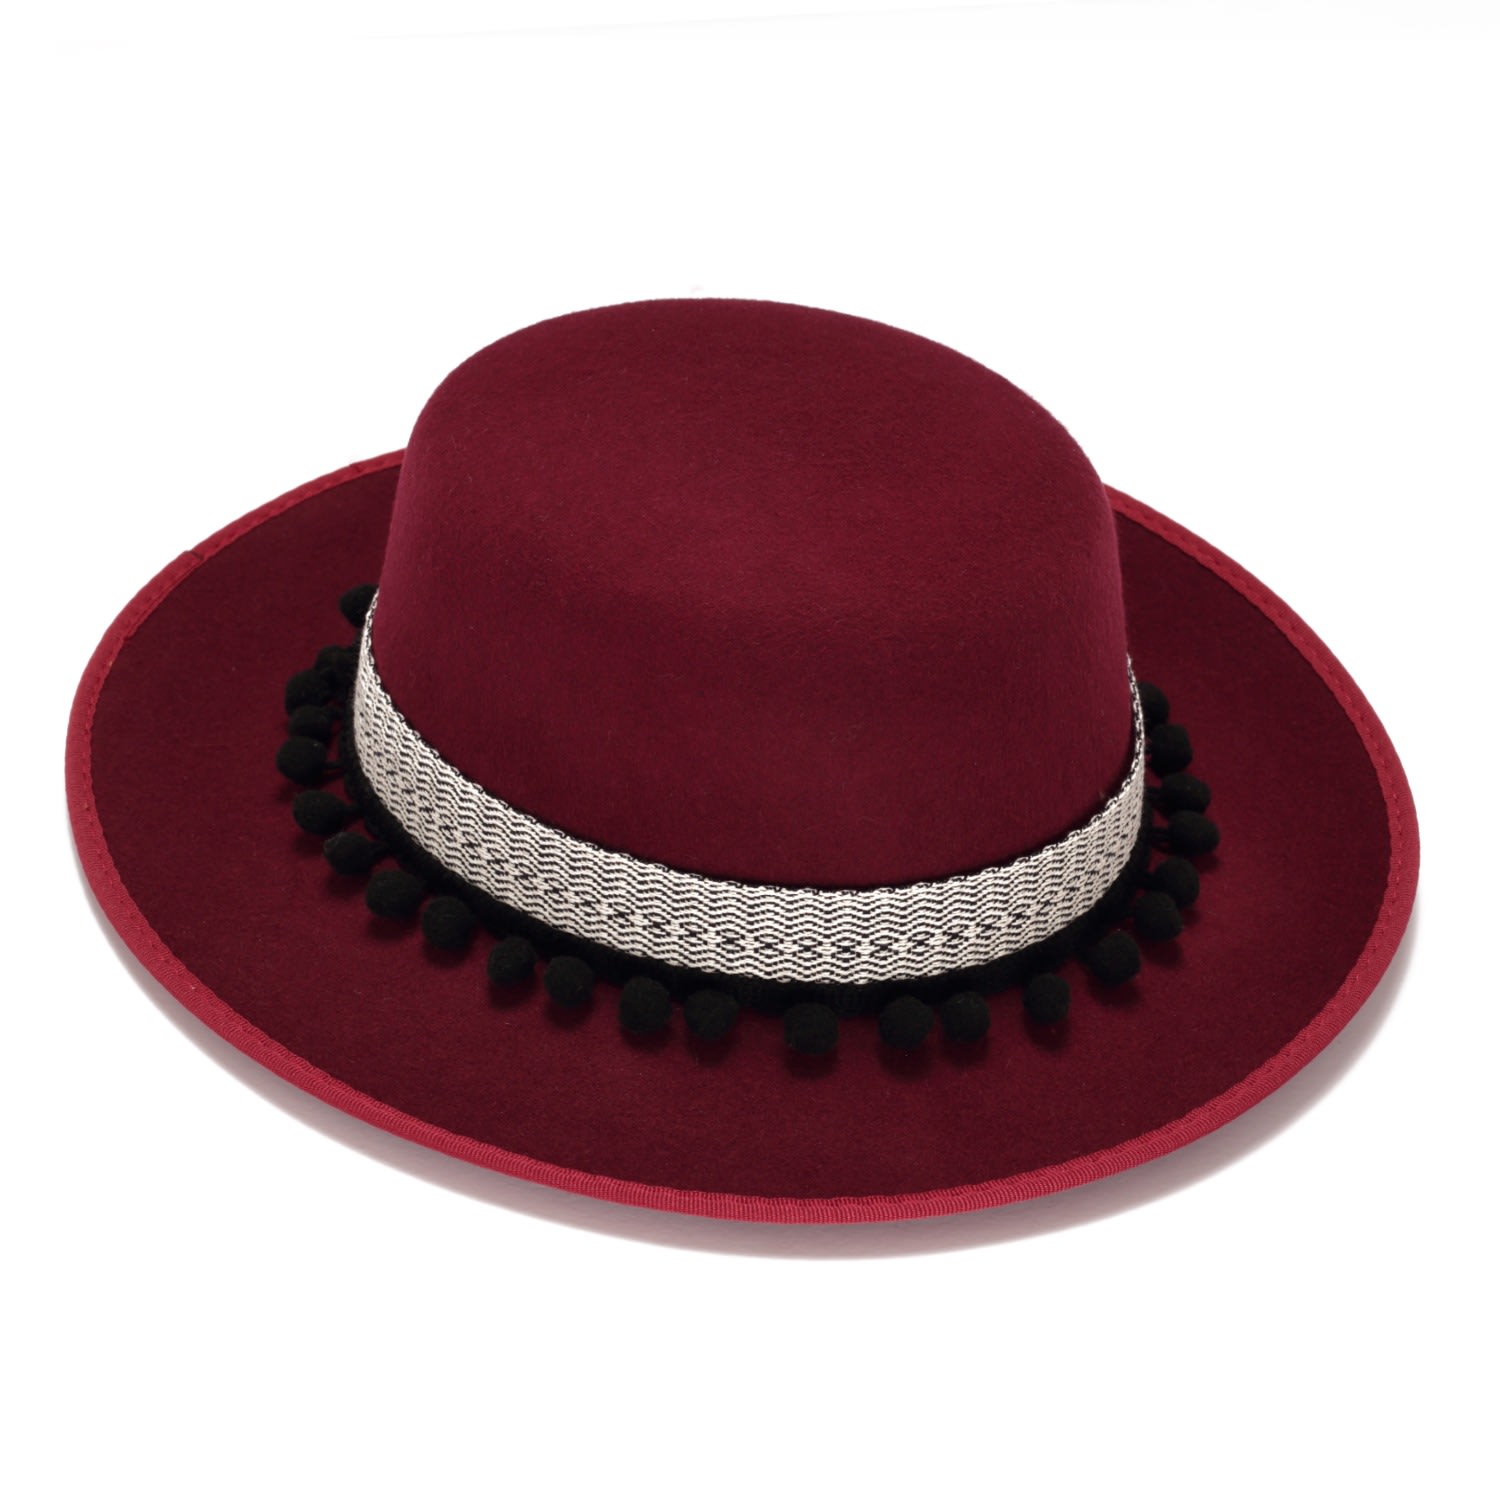 Women’s Red Boho Chic Boater Felt Hats Medium Justine Hats